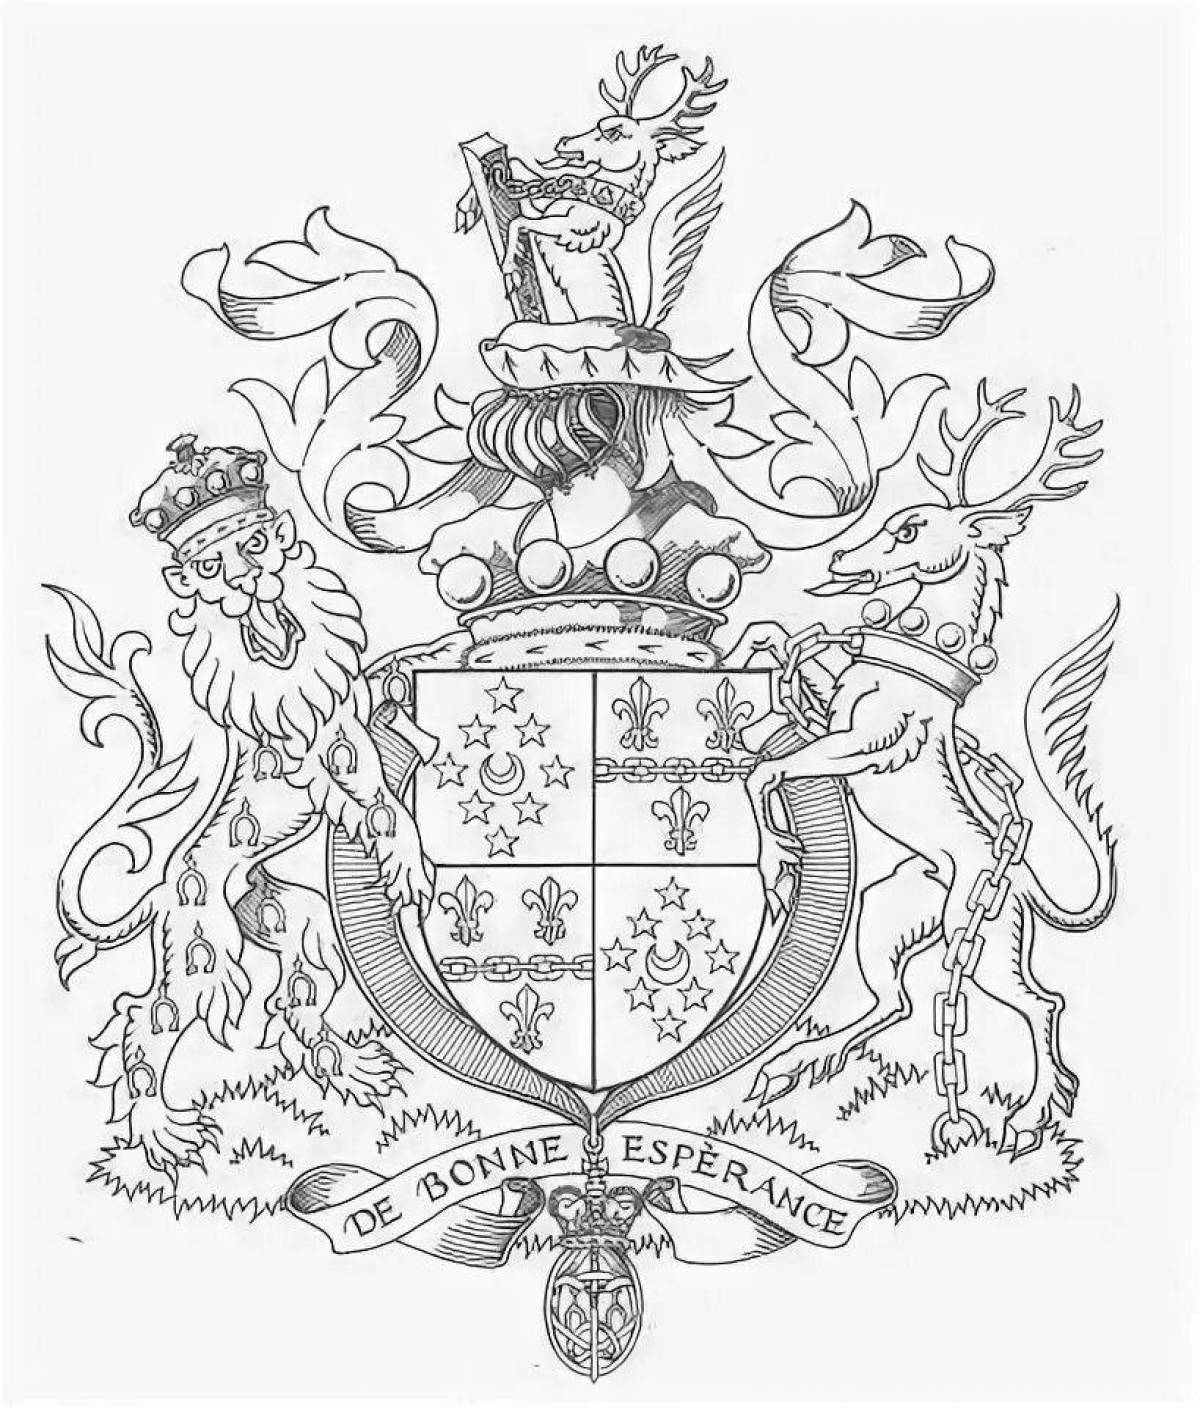 Exquisite coat of arms of great britain